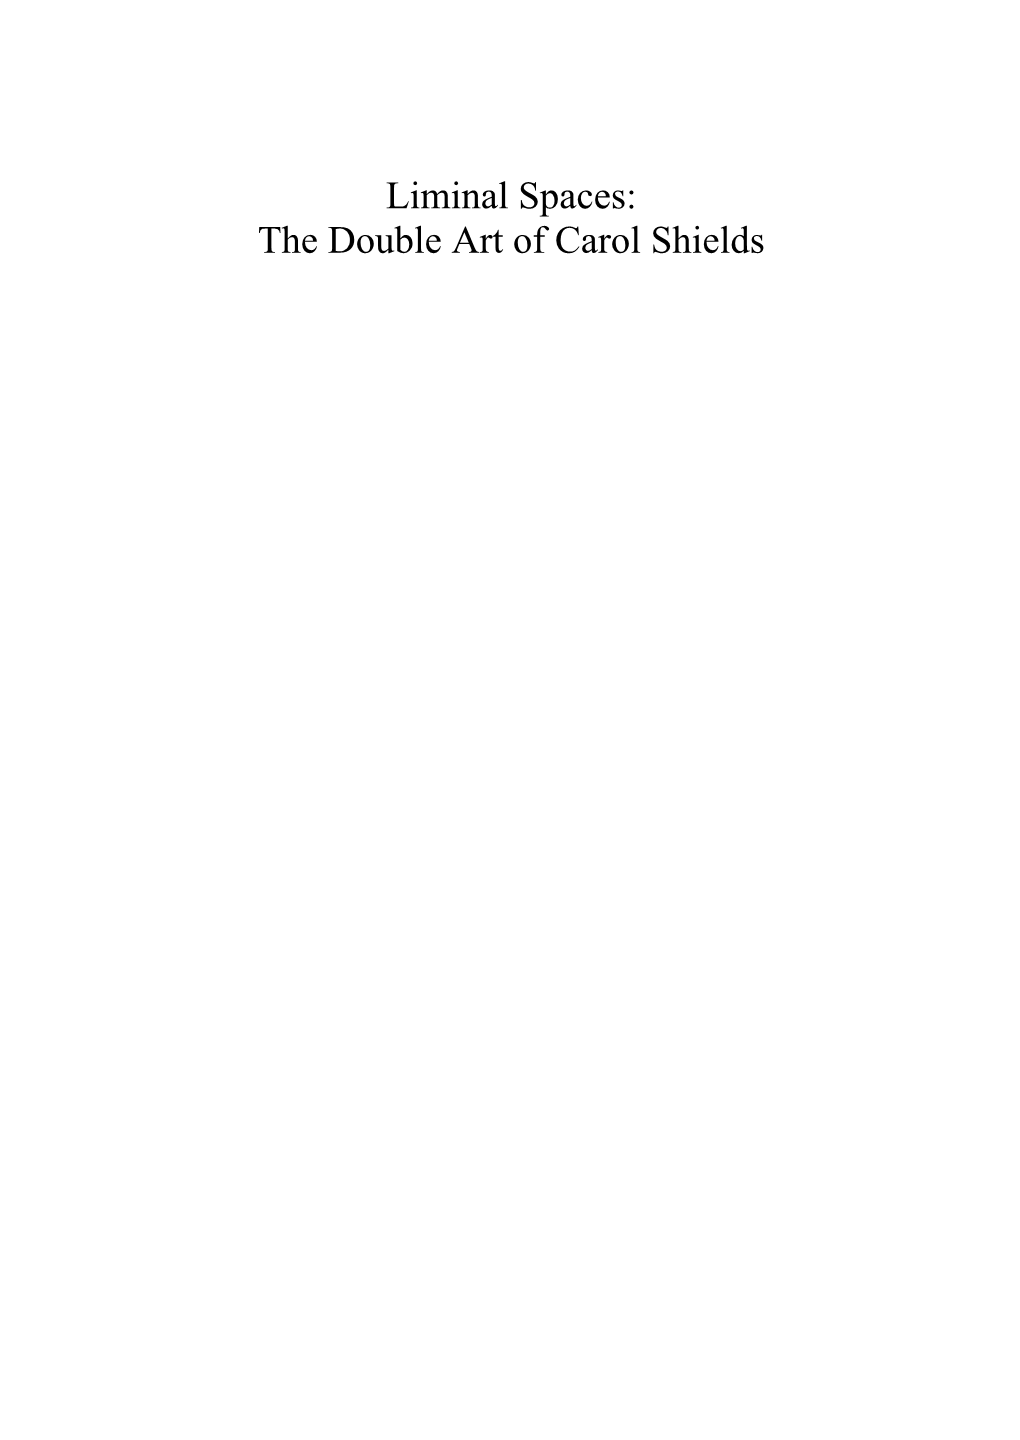 The Double Art of Carol Shields